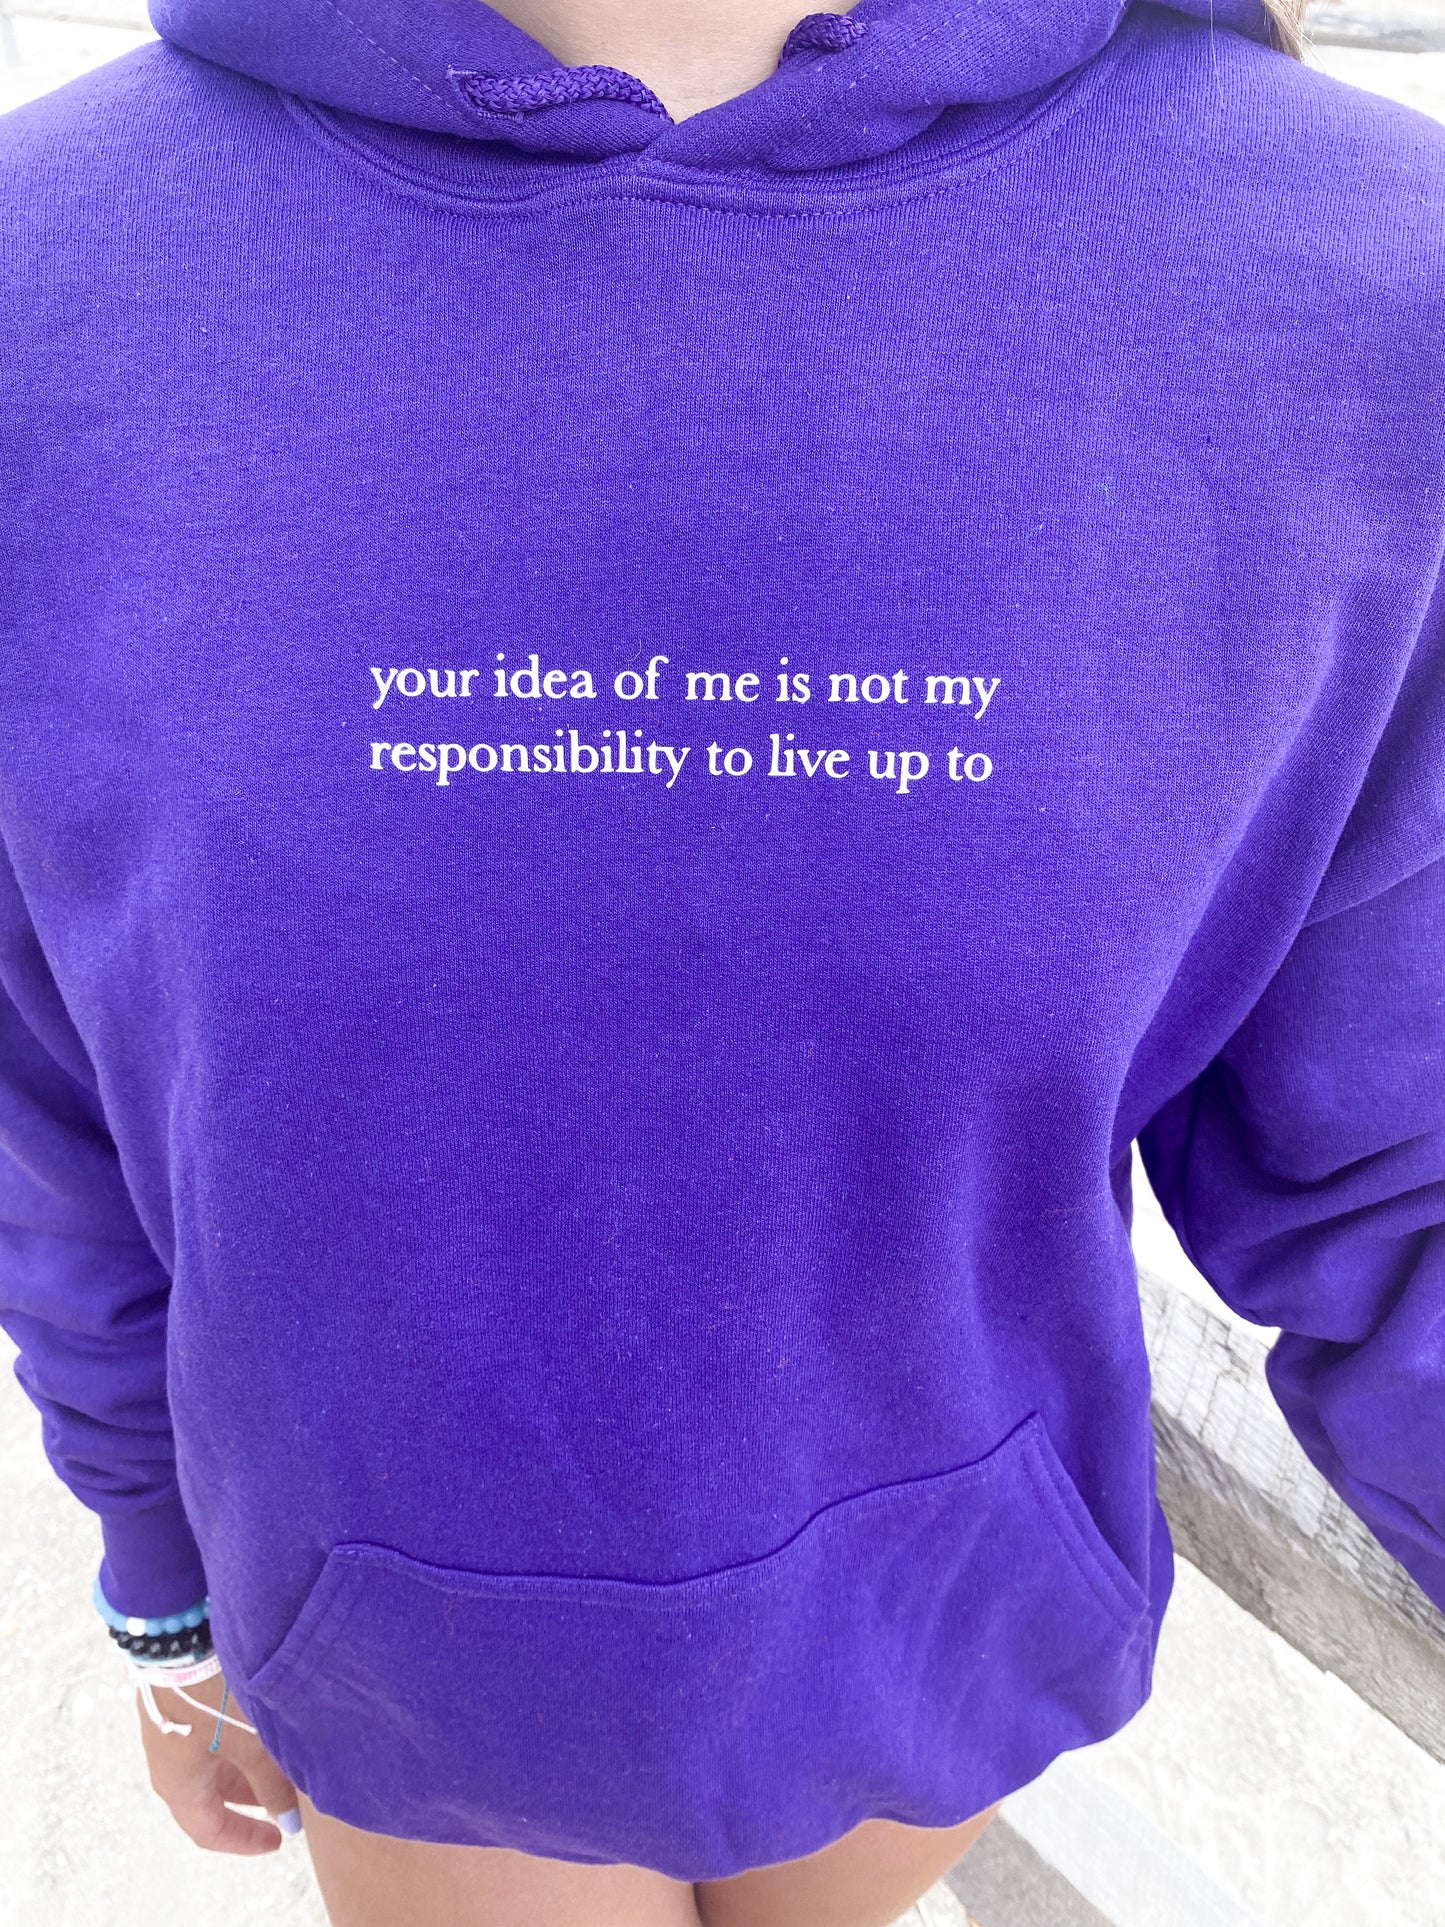 Not my responsibility sweatshirt